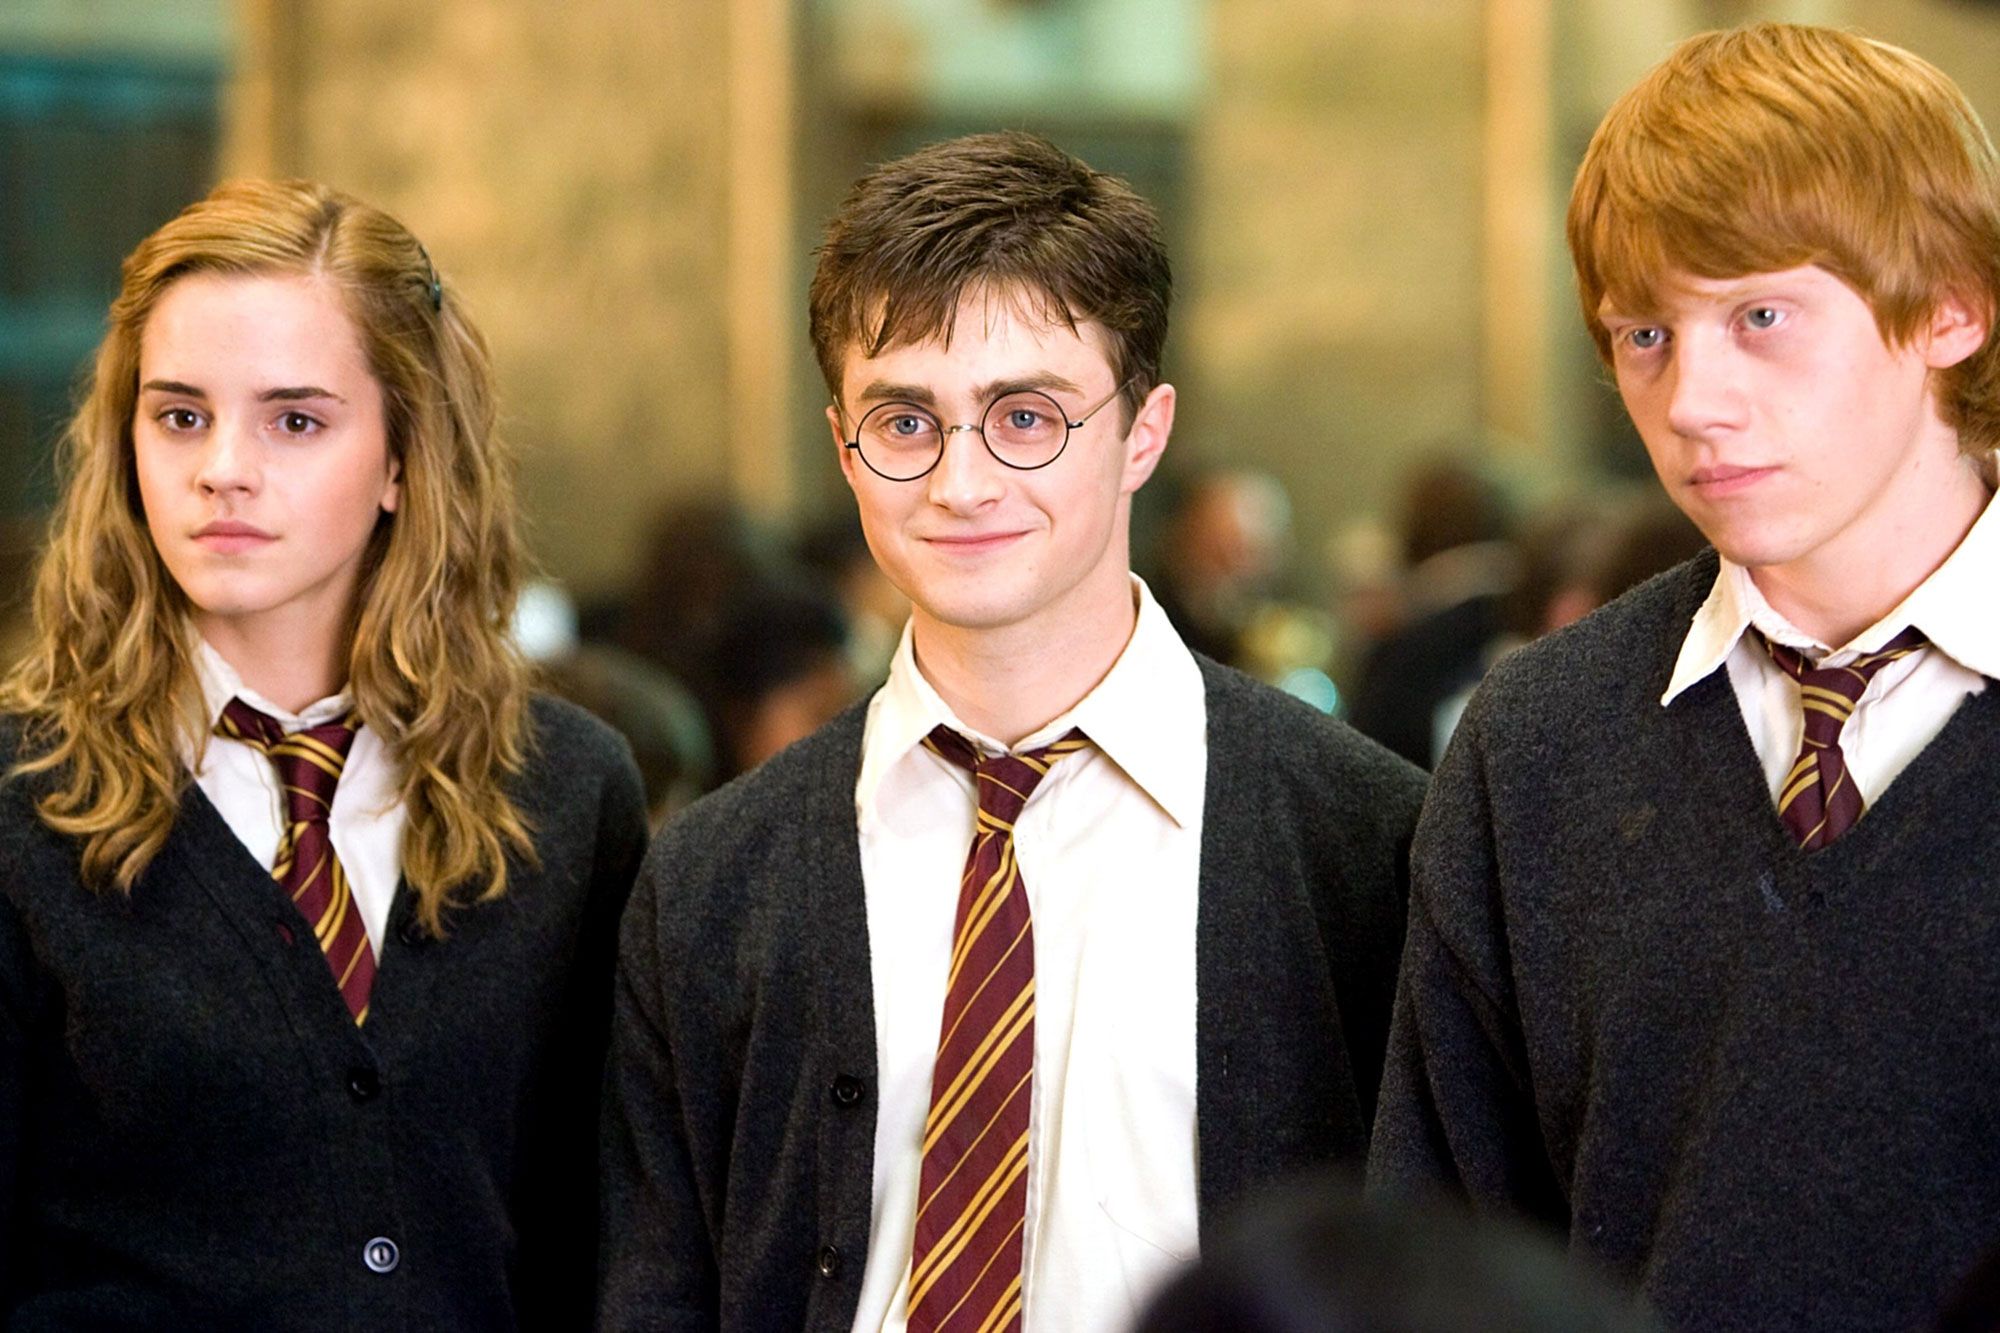 The 3 leads, Emma Watson, Daniel Radcliffe, and Rupert Grint